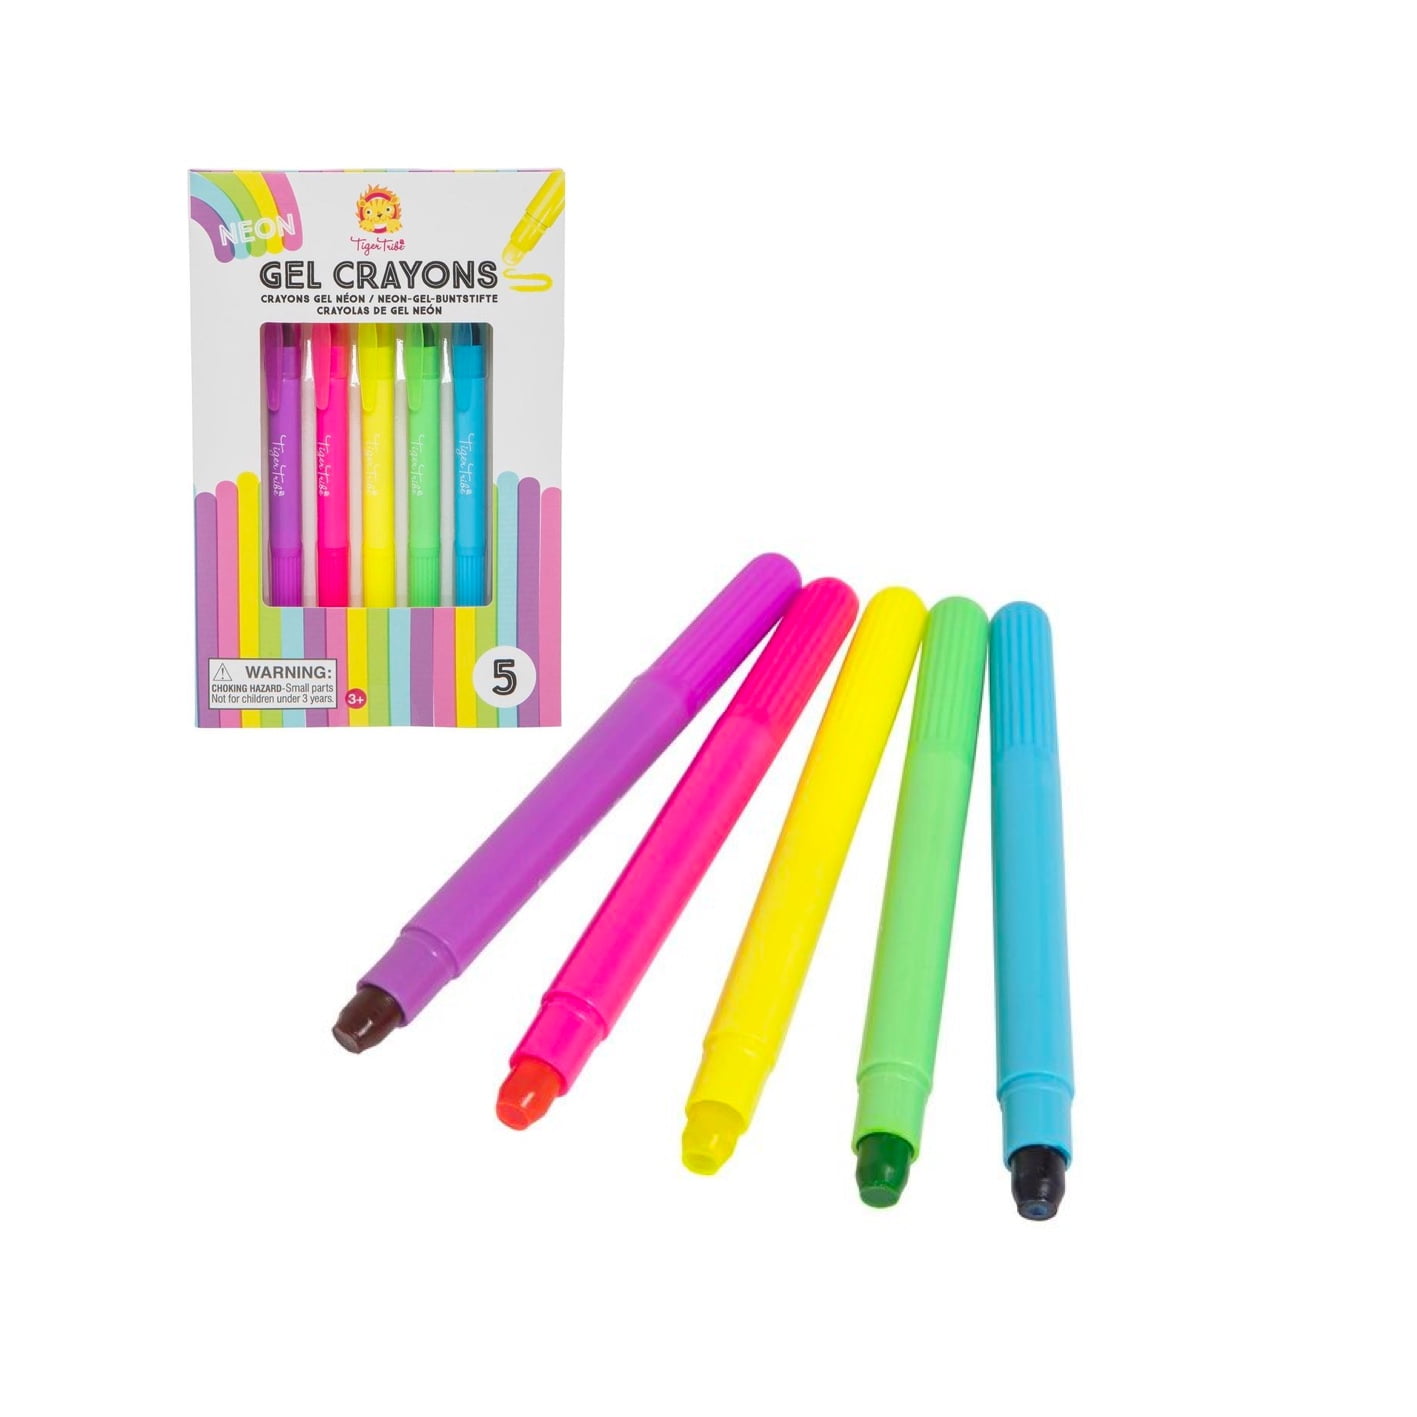 Neon gel crayons